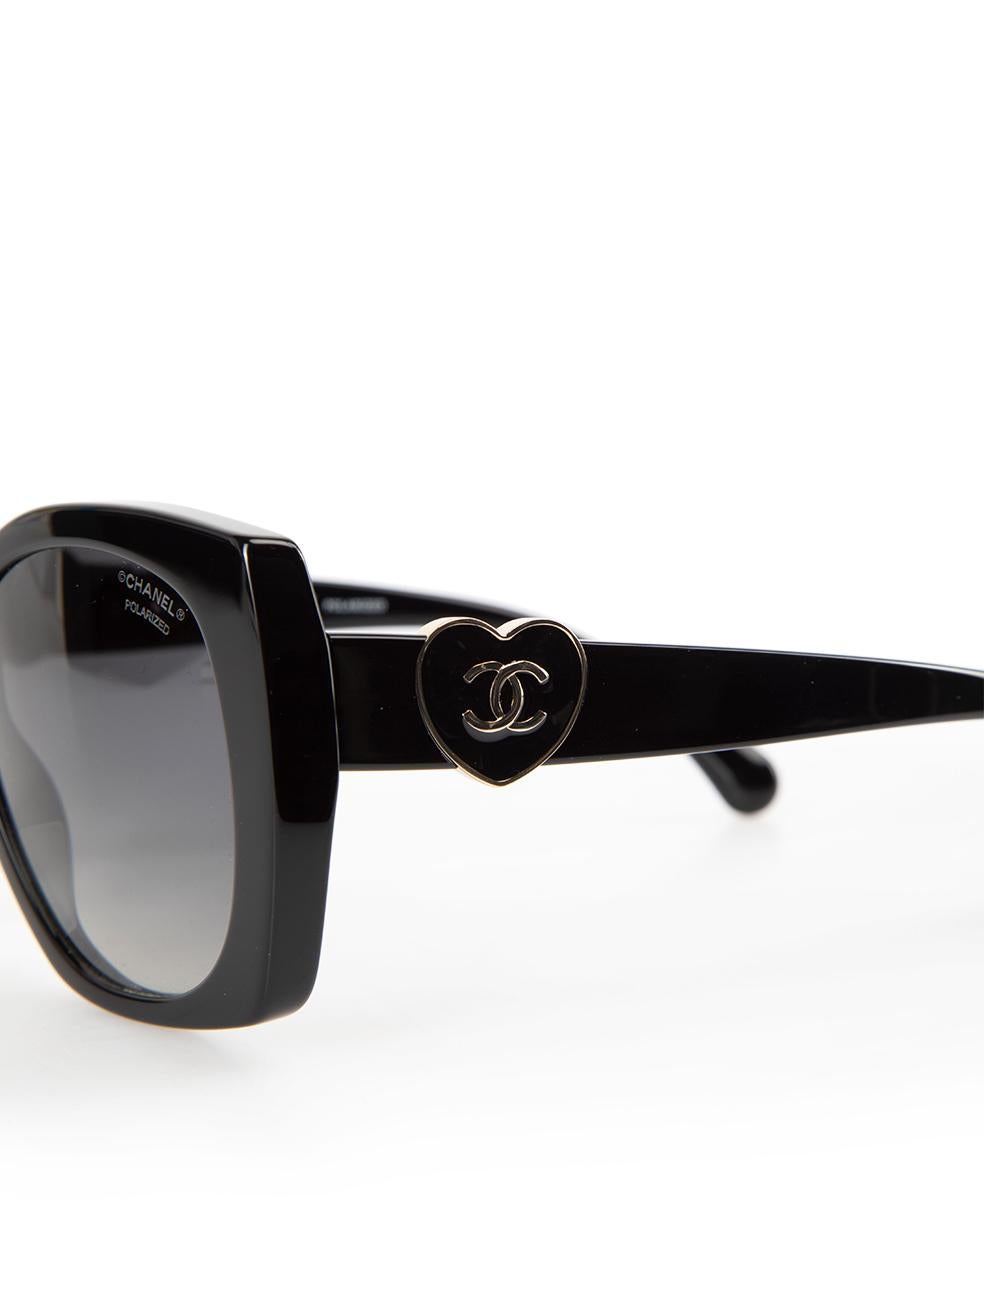 Chanel Black Square Heart Detail Sunglasses For Sale 2